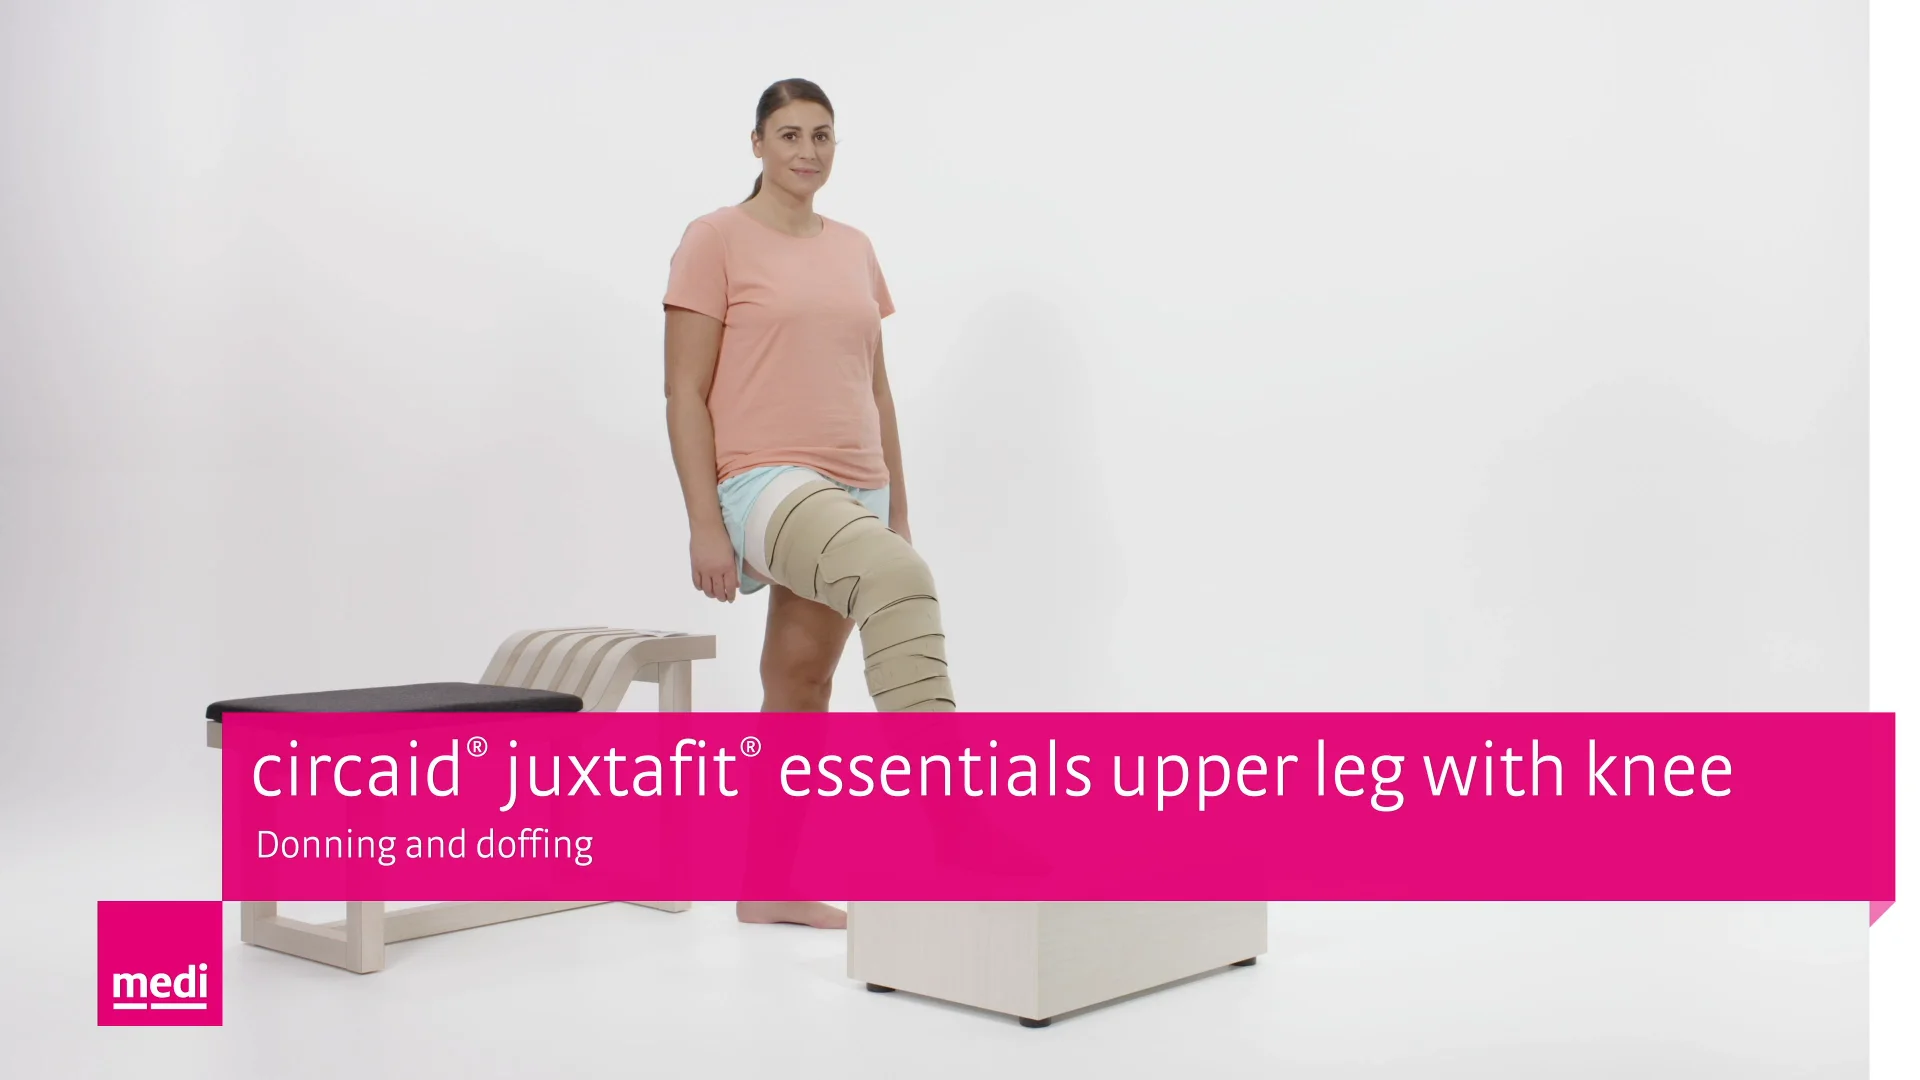 circaid® juxtafit® essentials upper leg with knee – Donning and